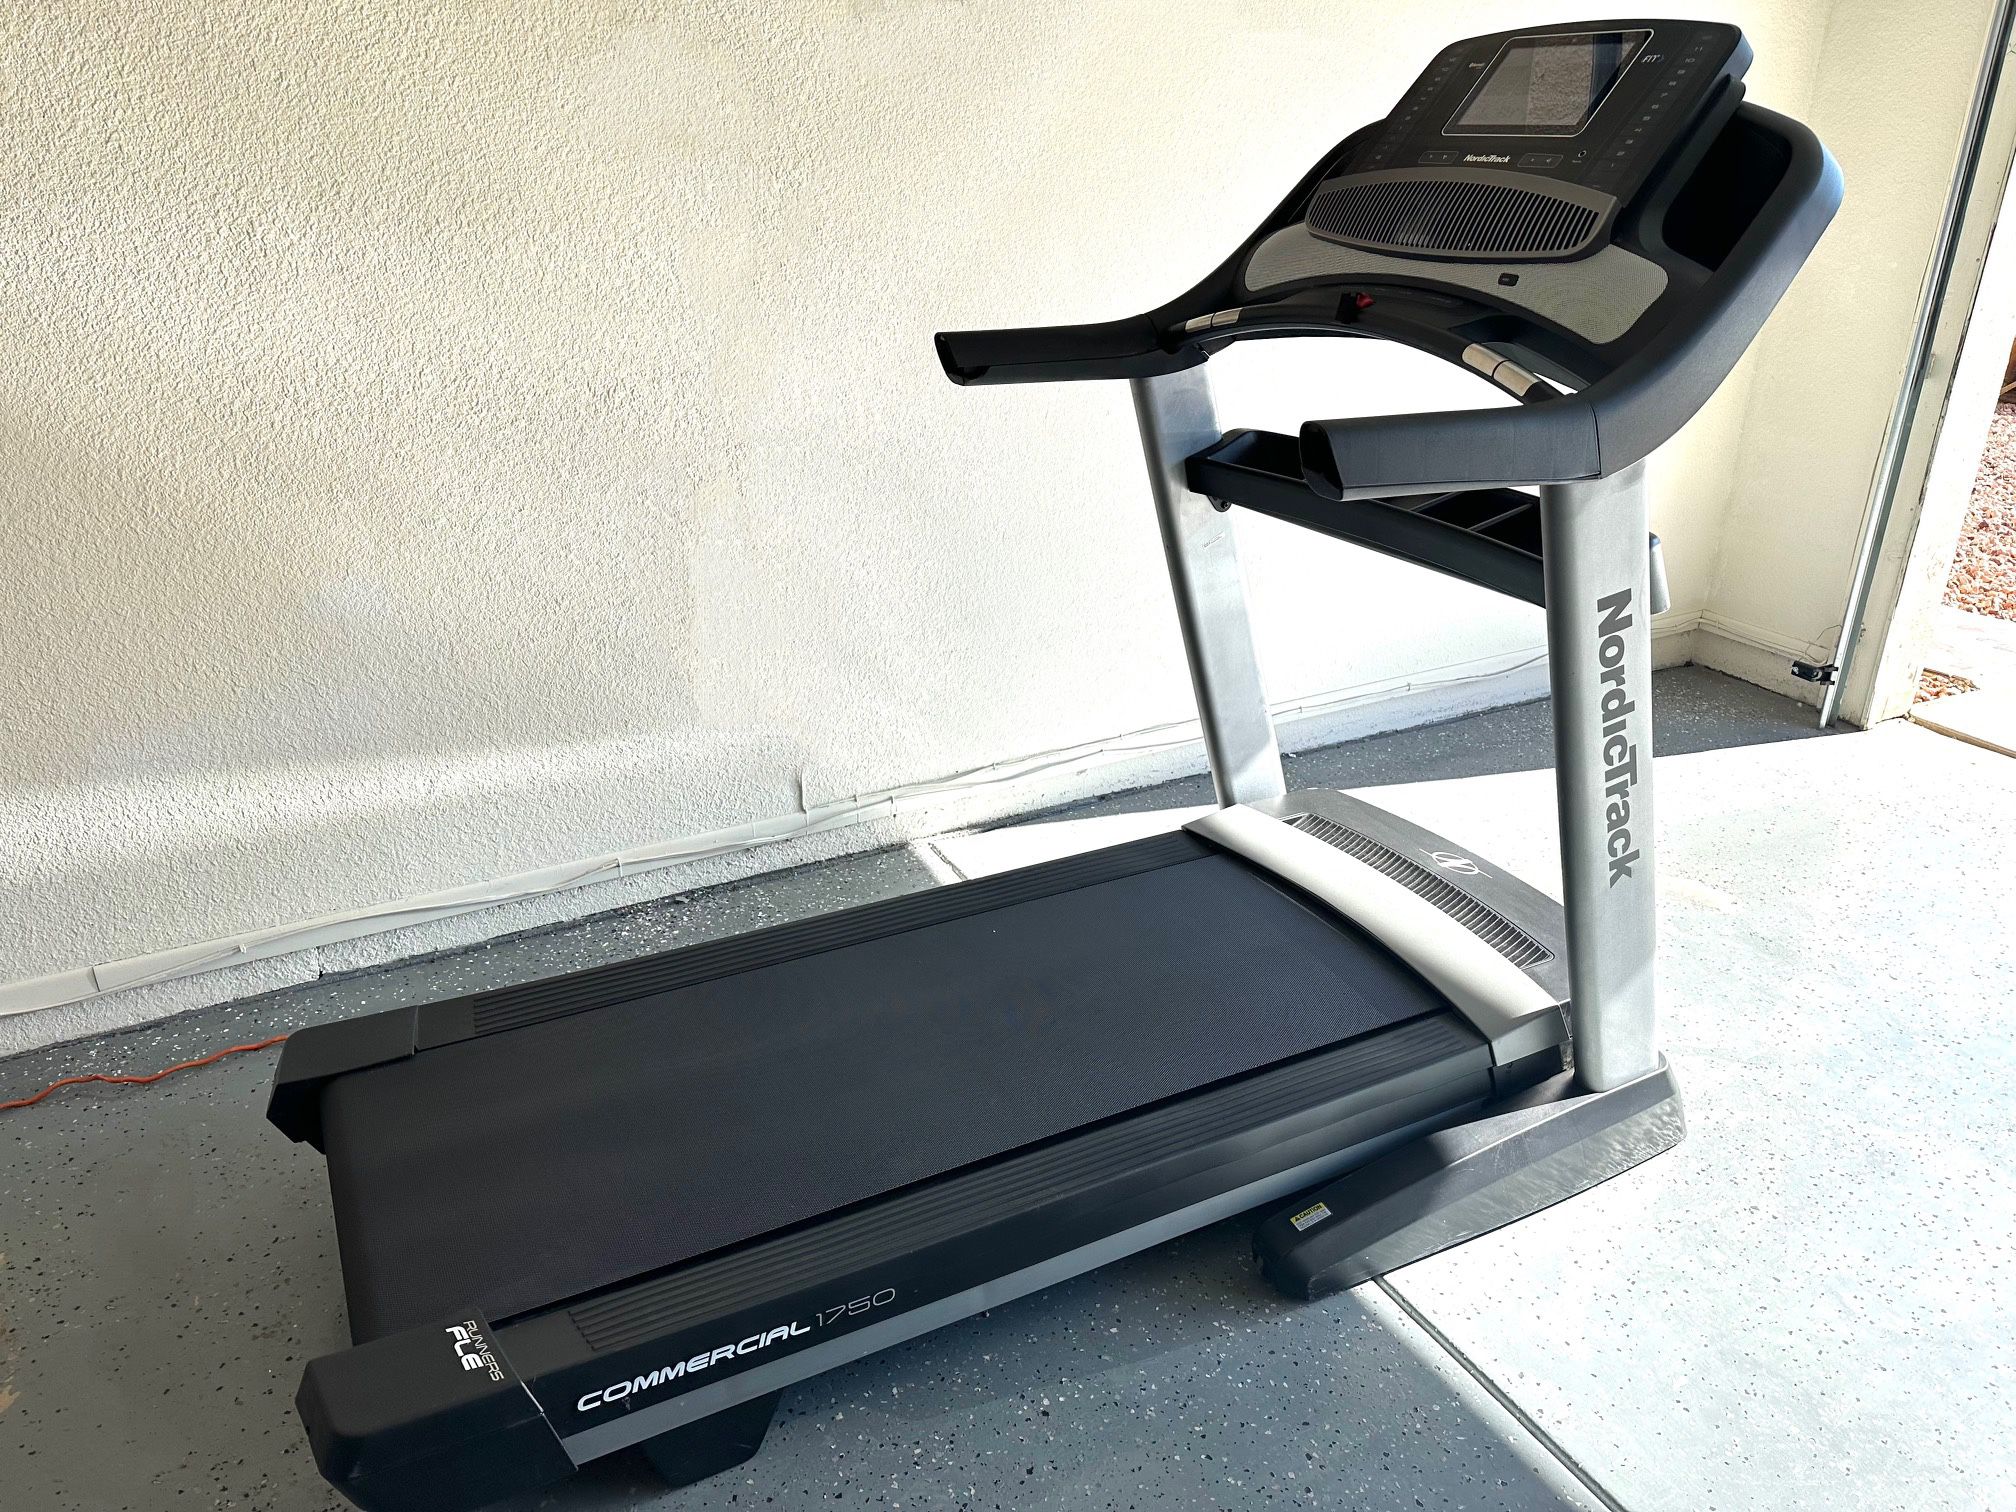 NordicTrack 1750 Commercial Treadmill 